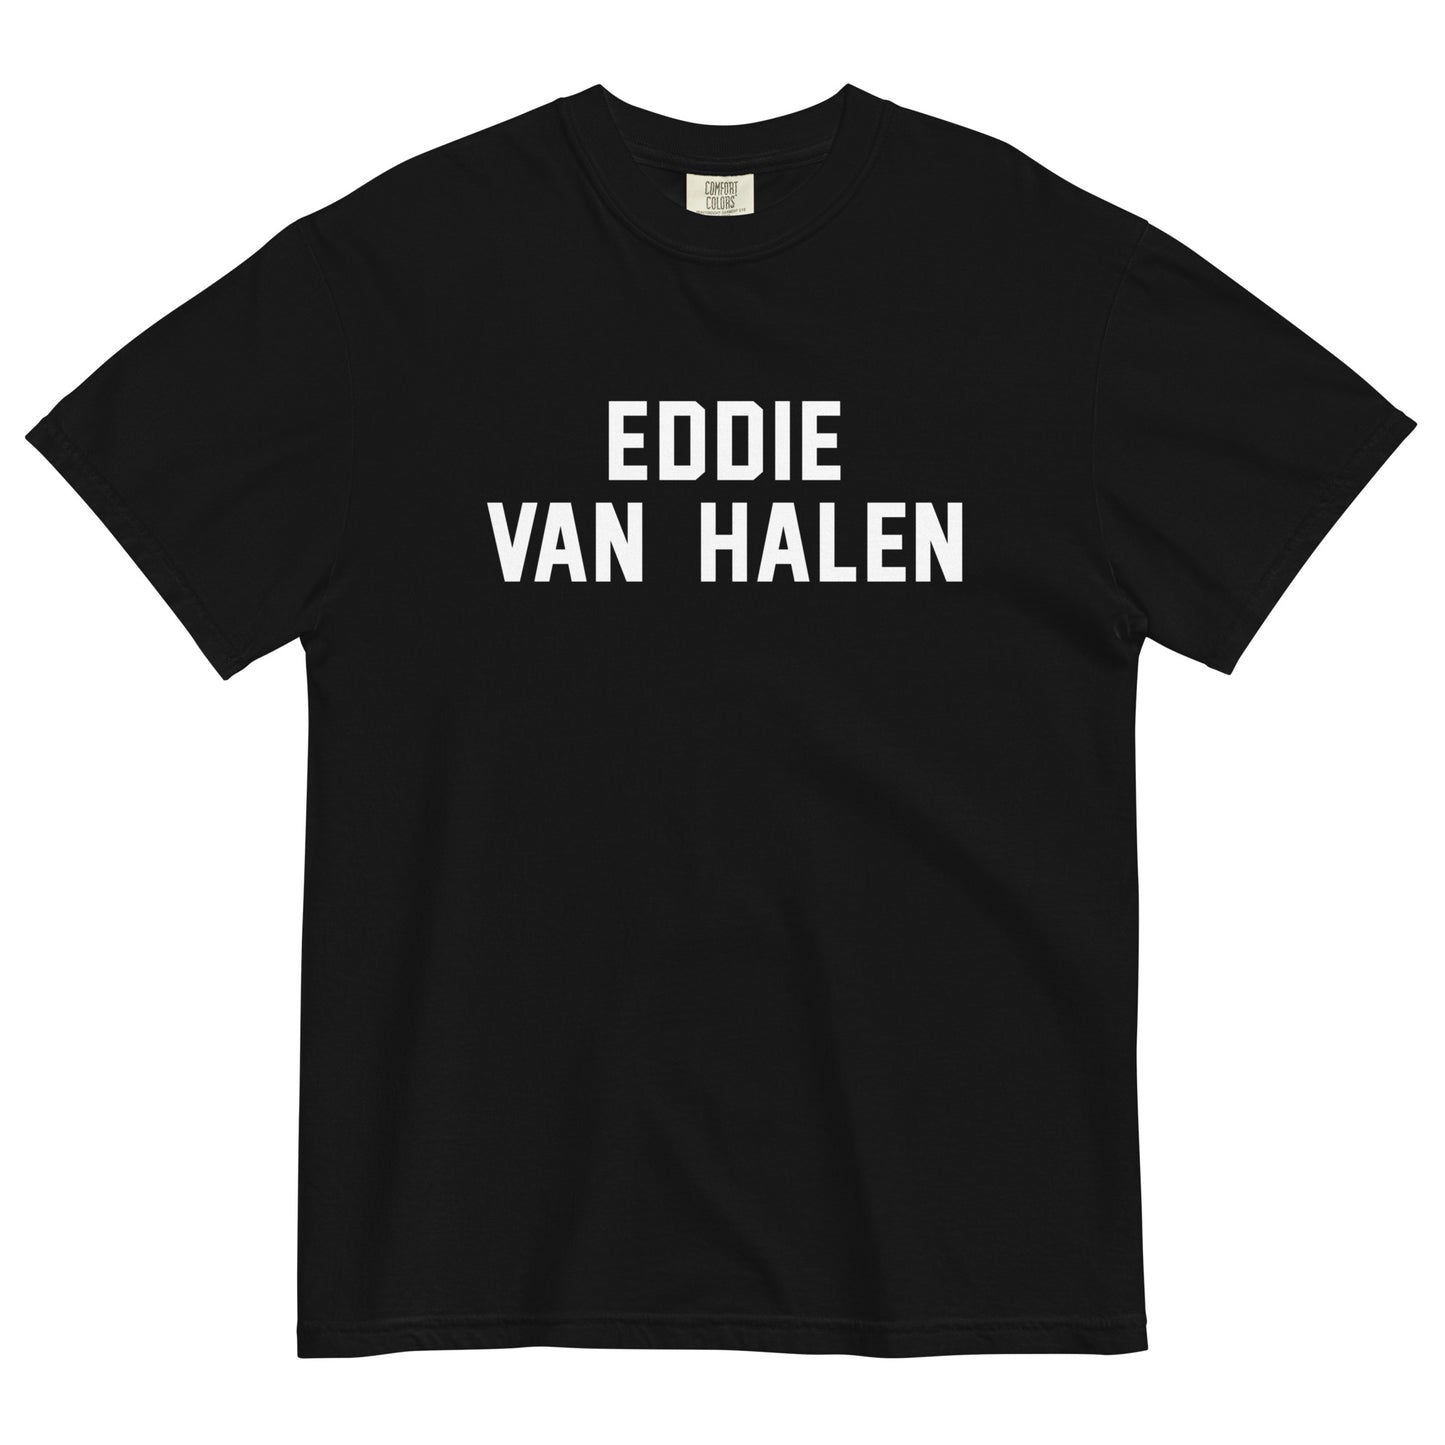 EDDIE VAN HALEN